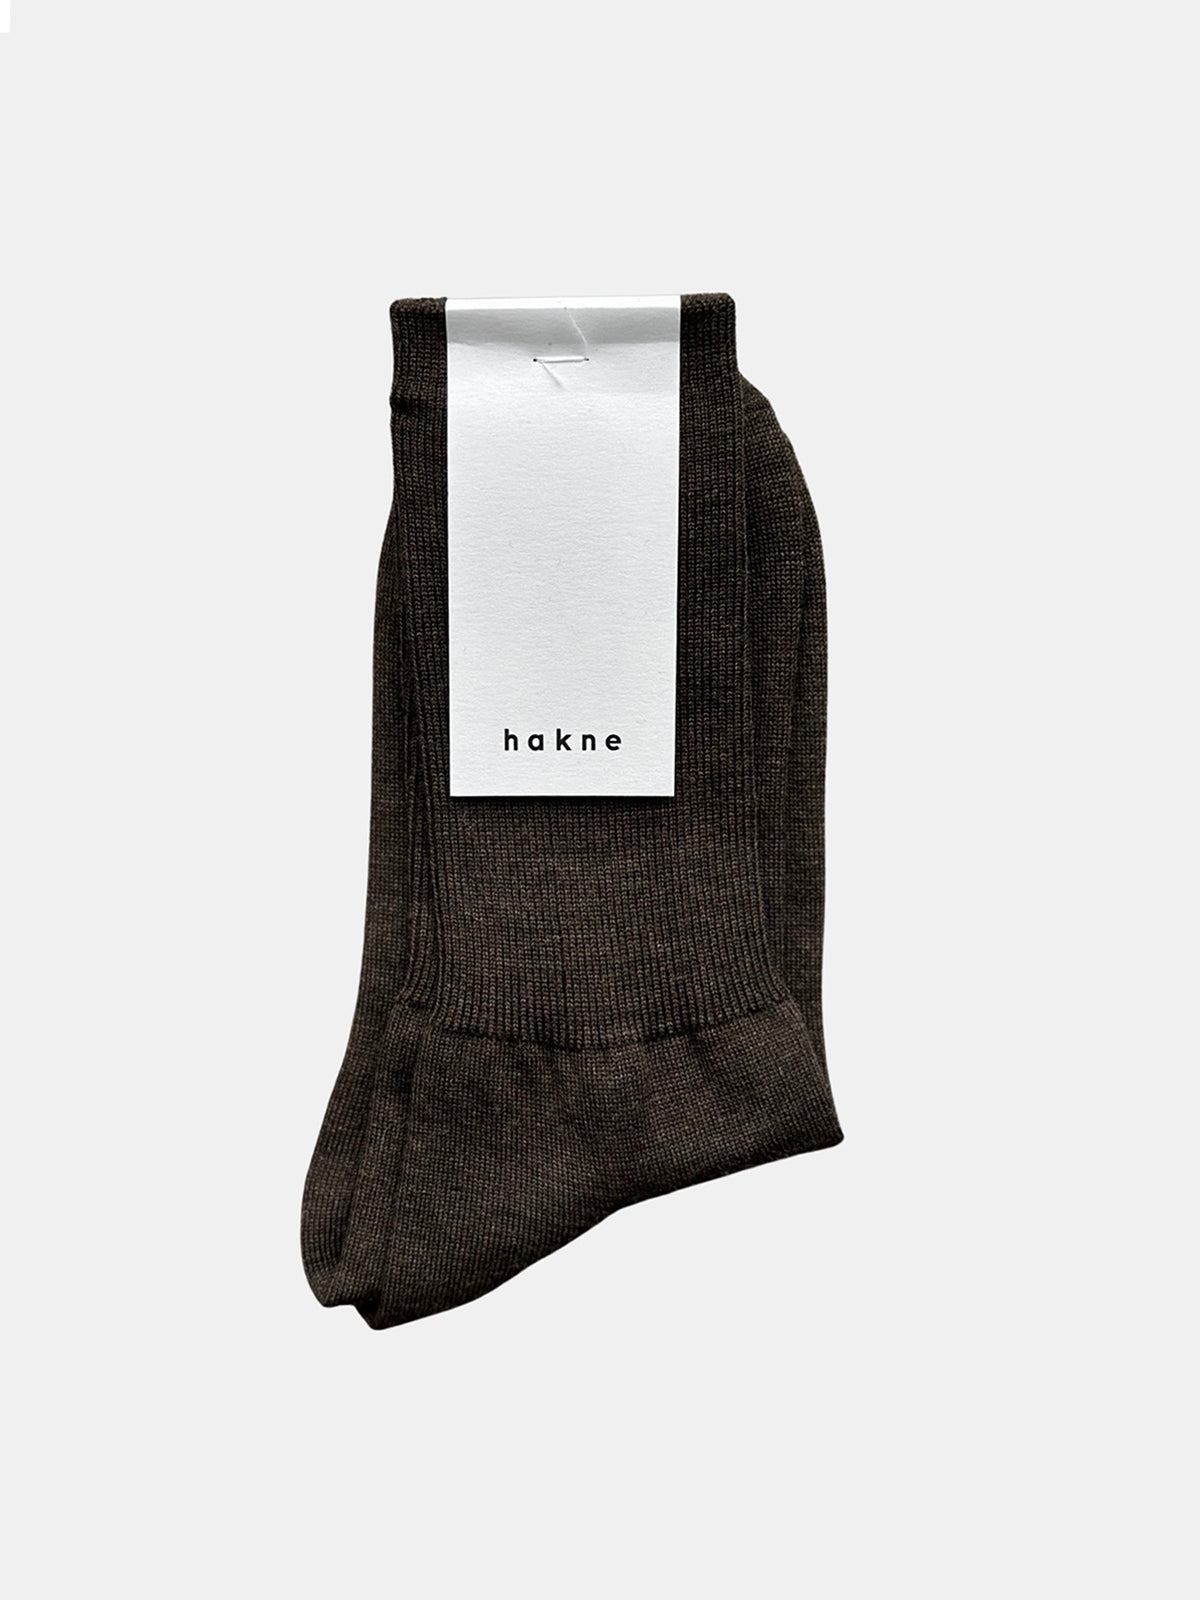 Merino Wool Ribbed Socks